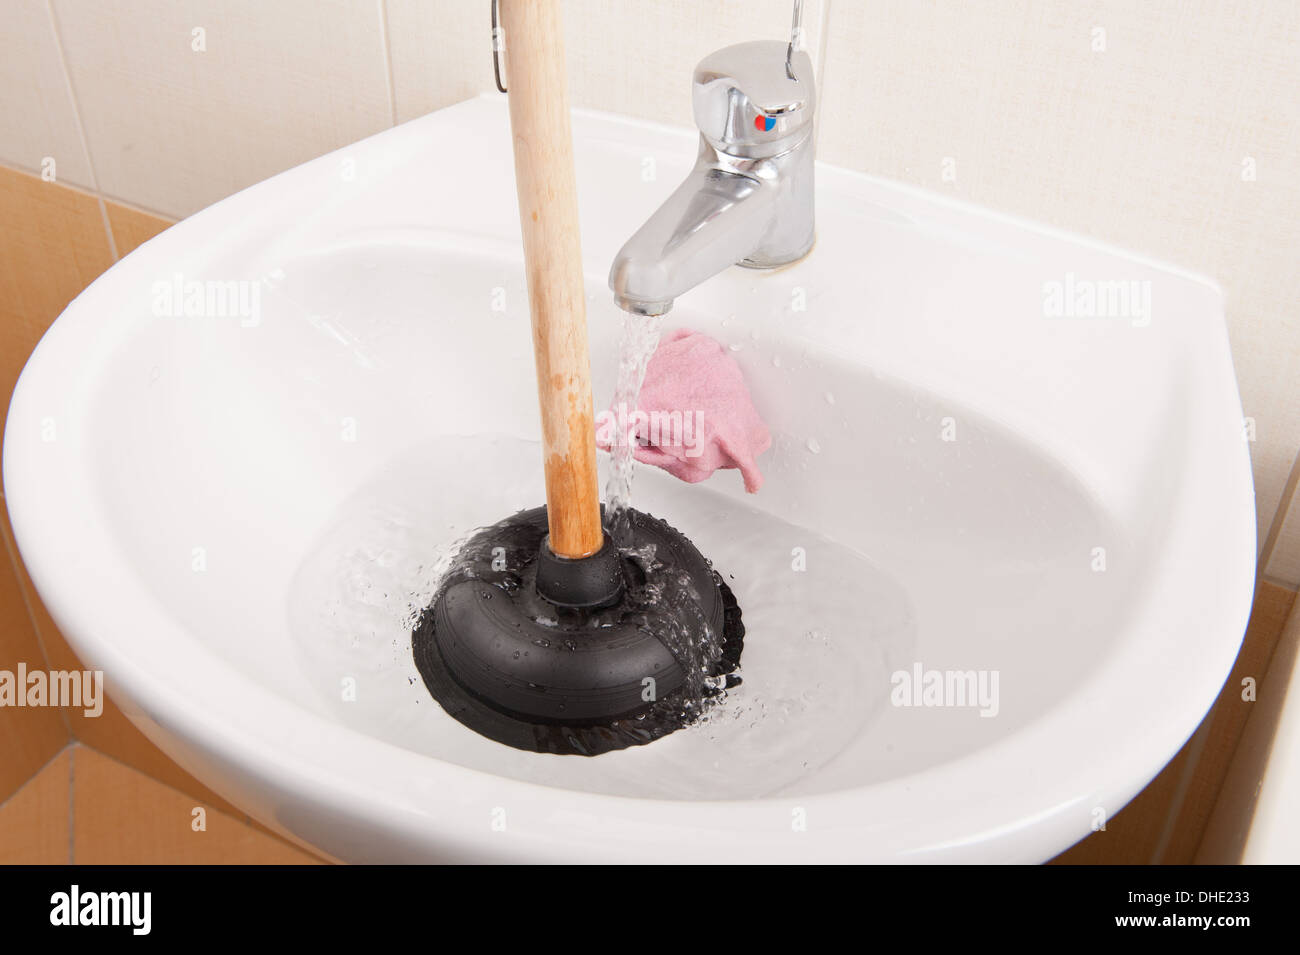 https://c8.alamy.com/comp/DHE233/black-sink-plunger-tool-in-bathroom-sink-DHE233.jpg